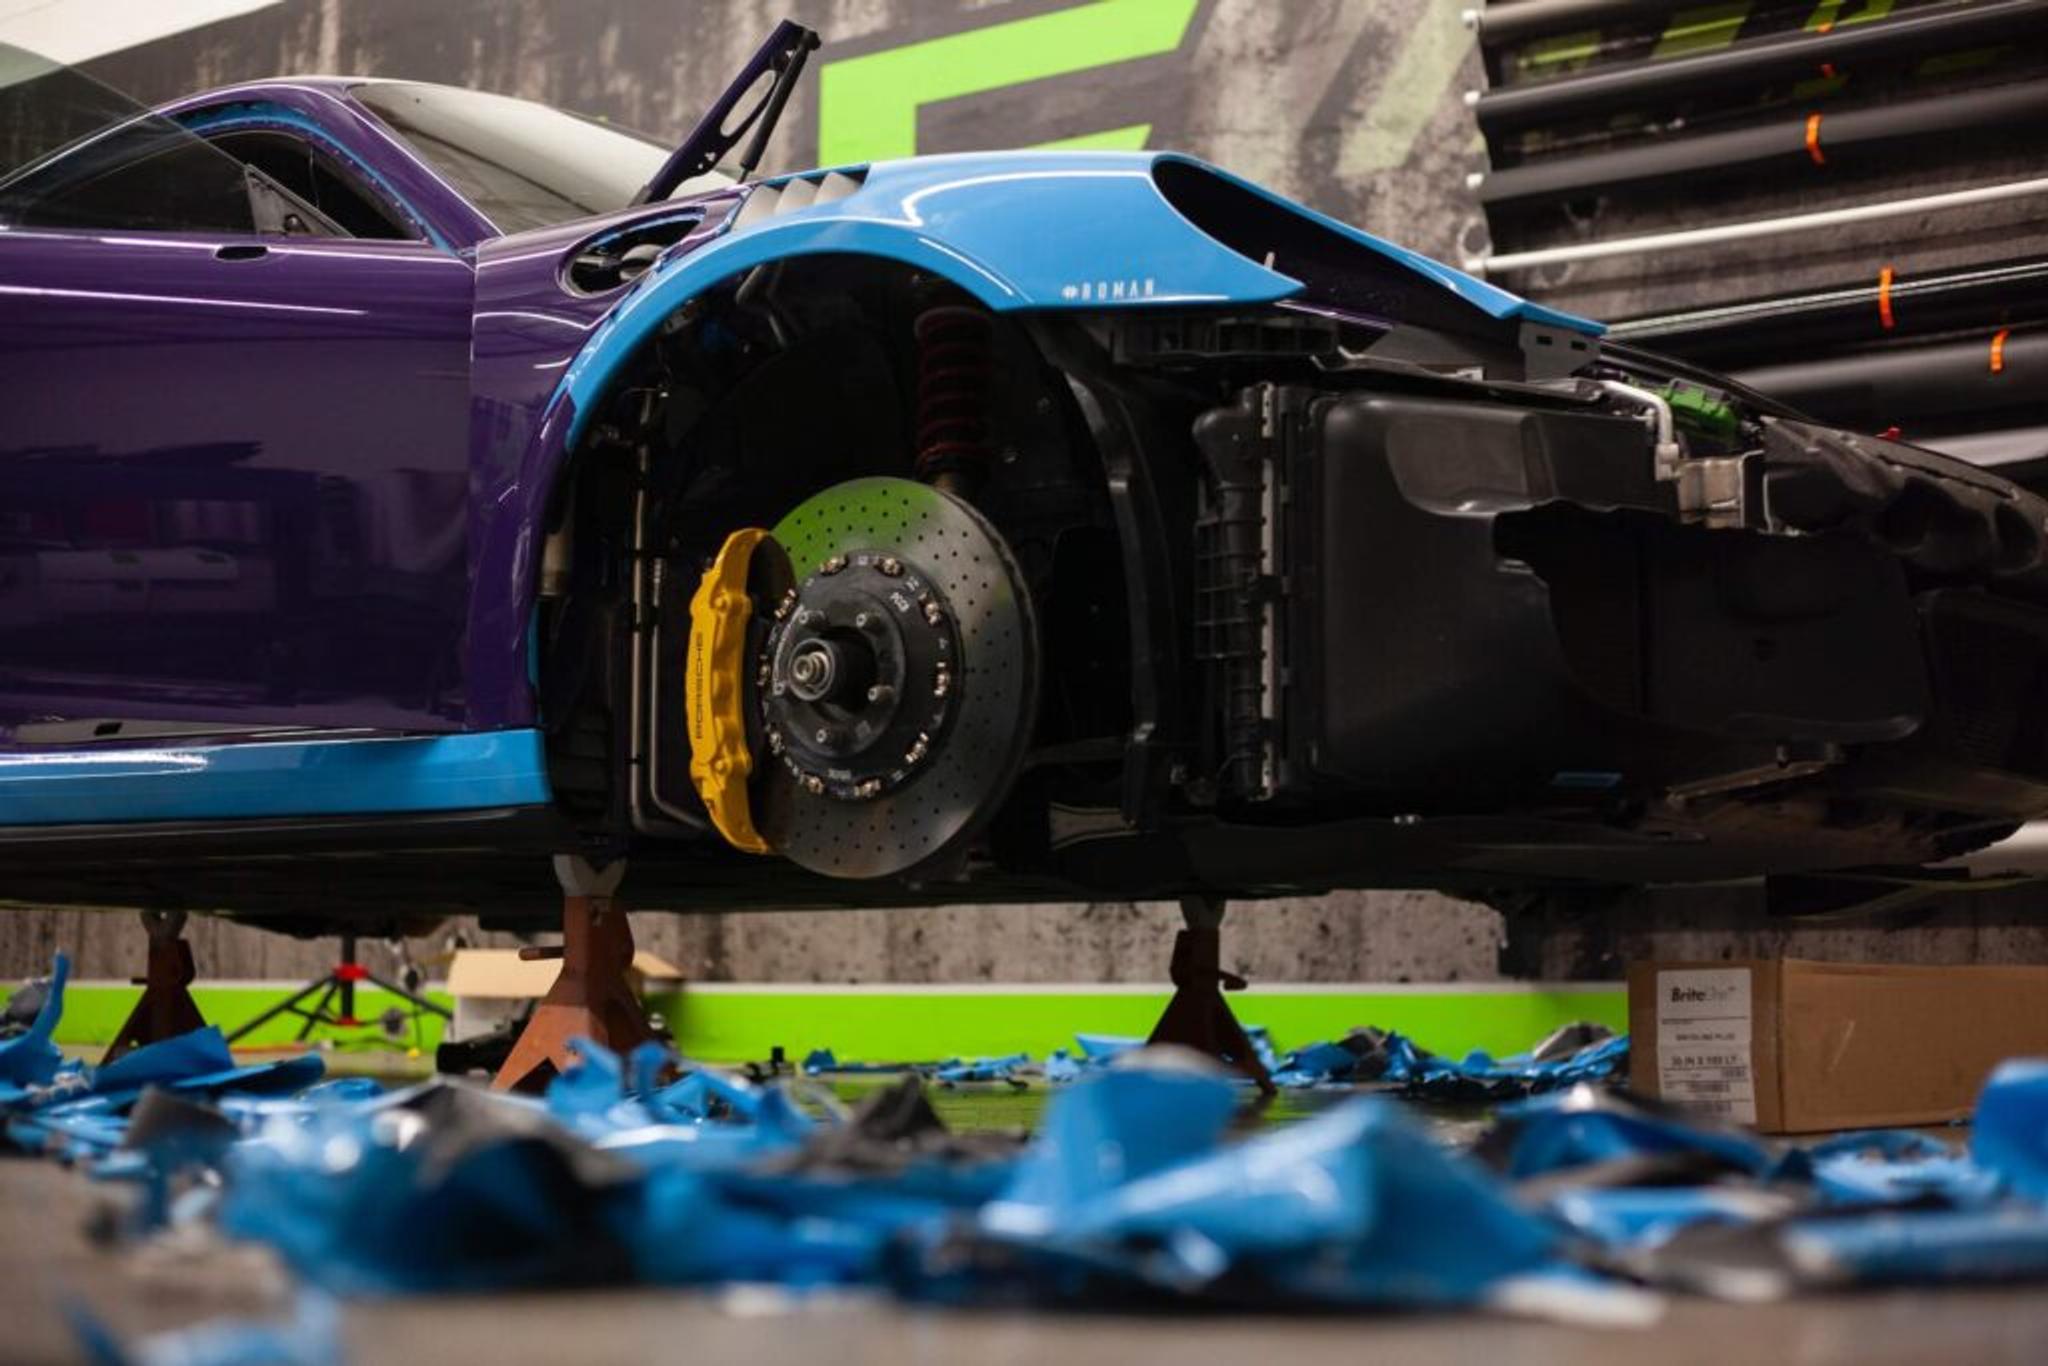 Removing blue PPF of purple Porsche 911 